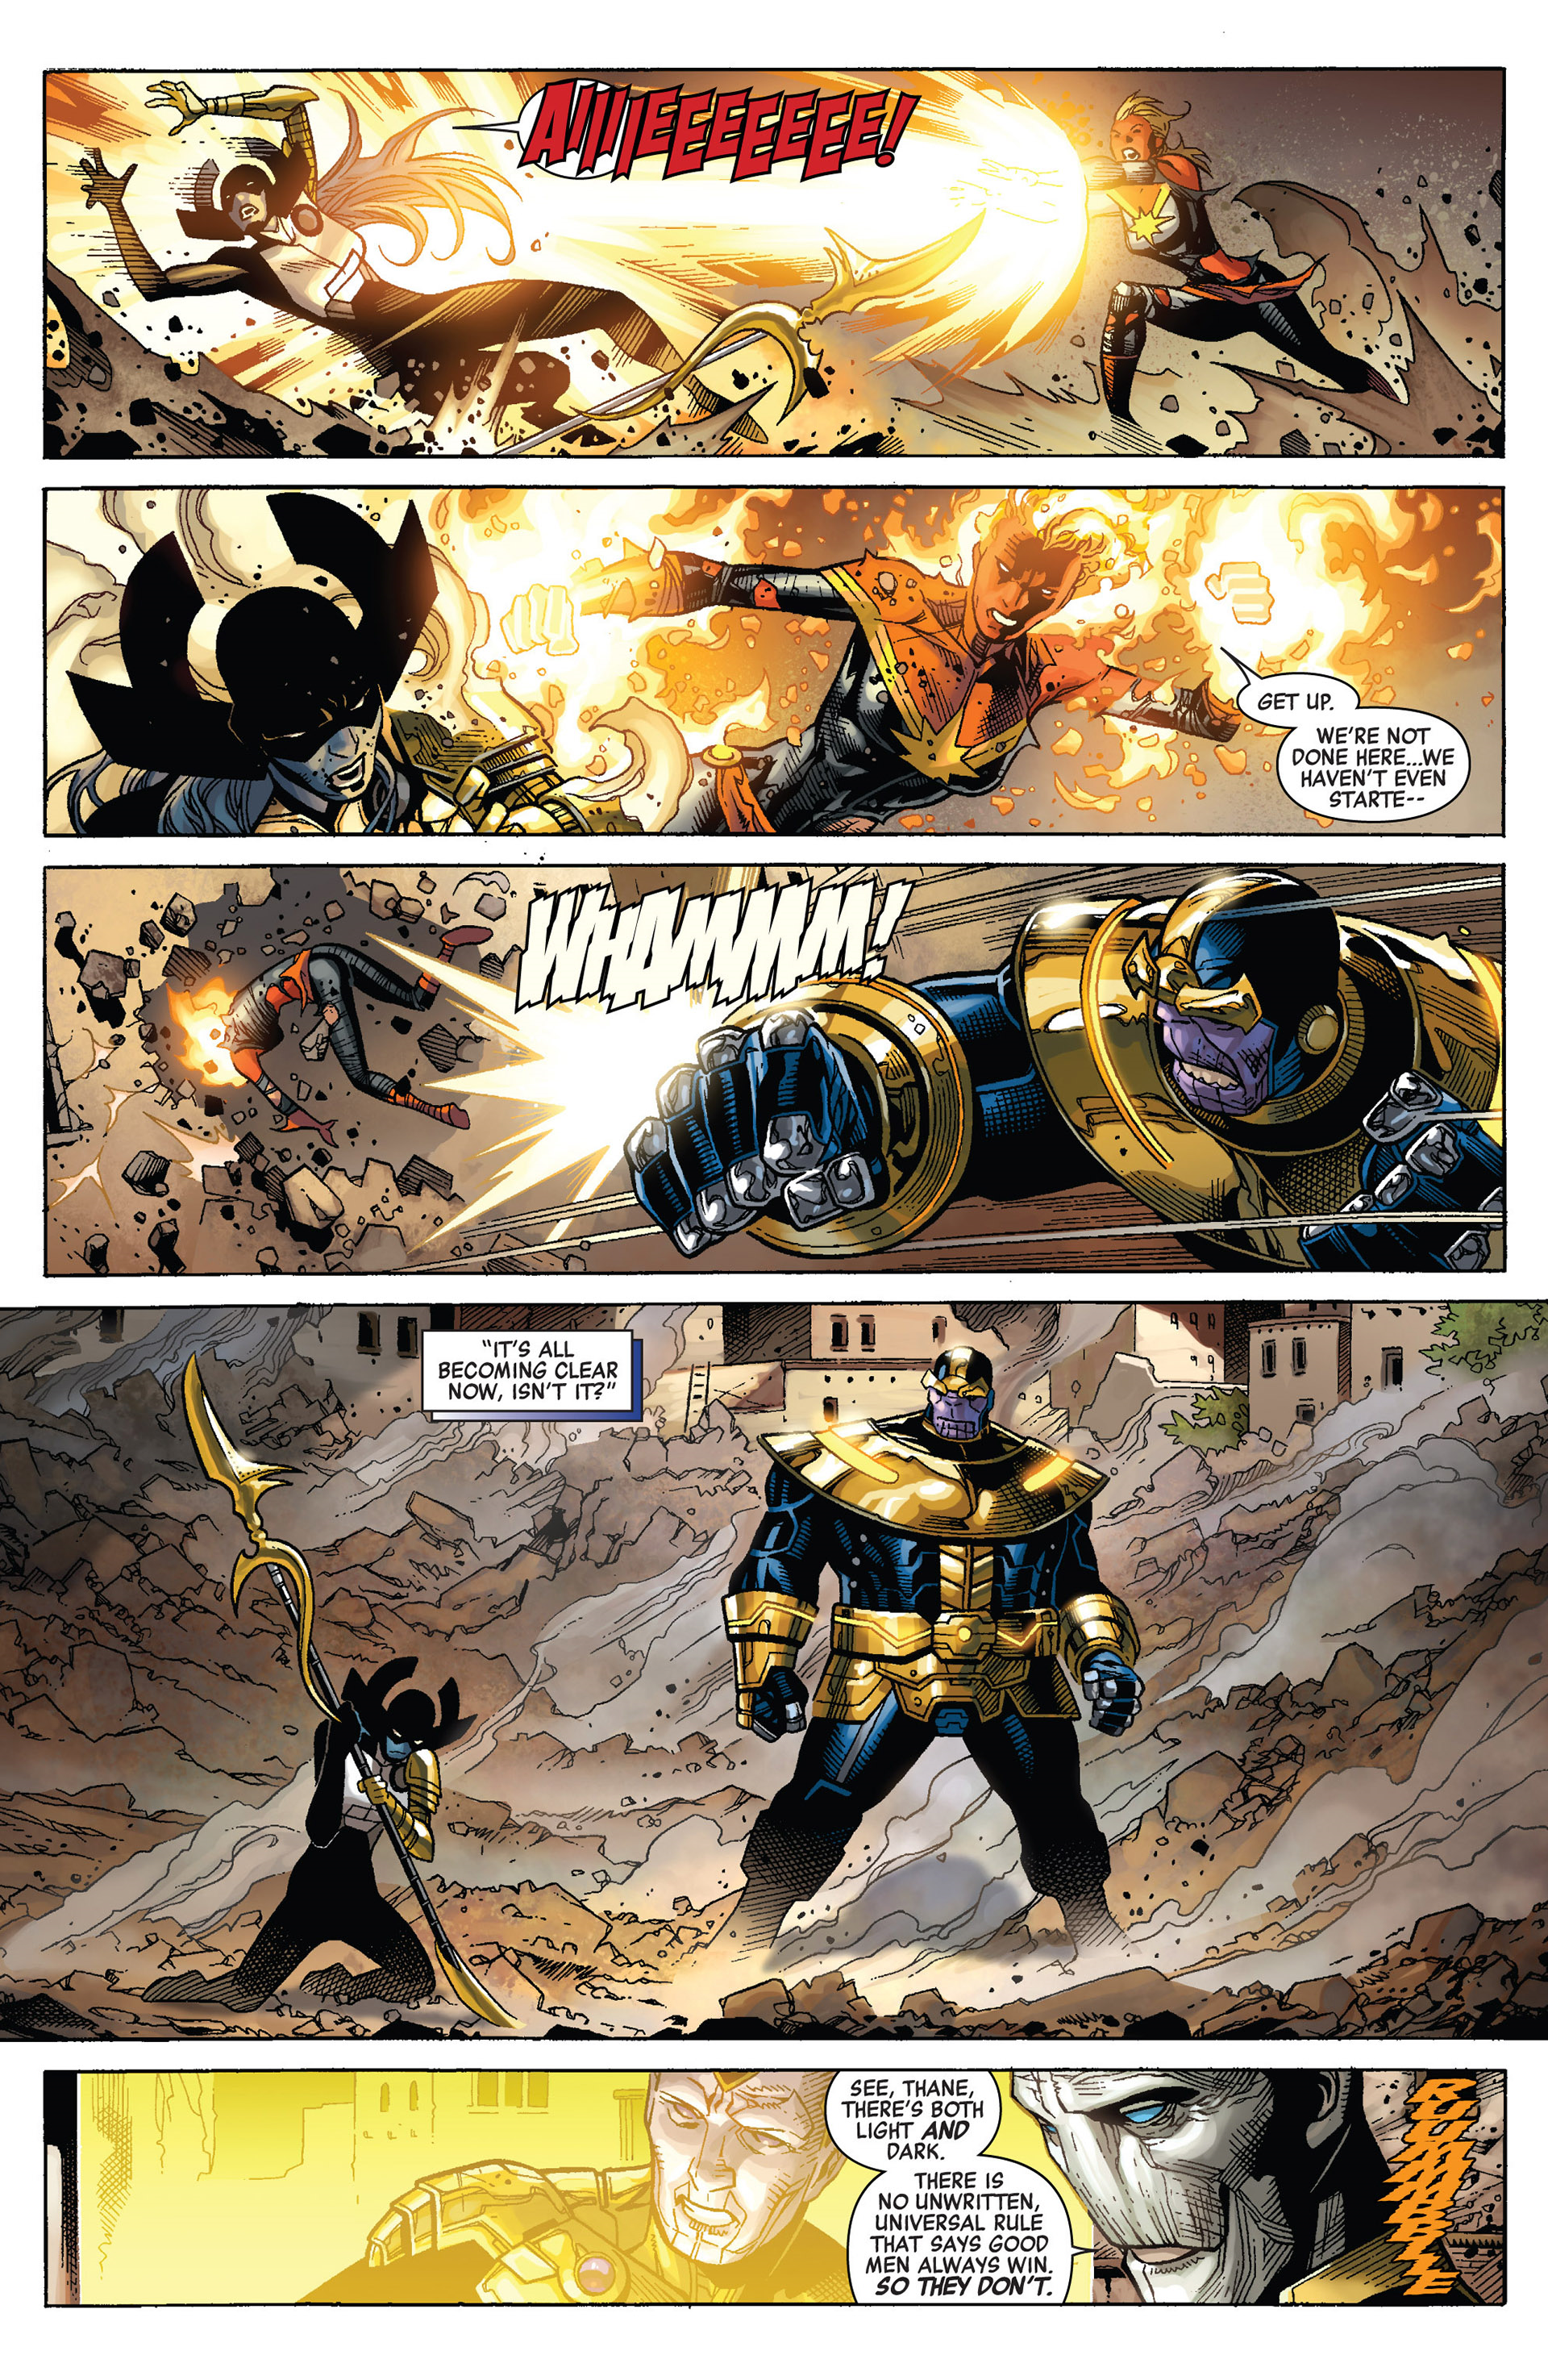 Thanos defeats Carol Danvers